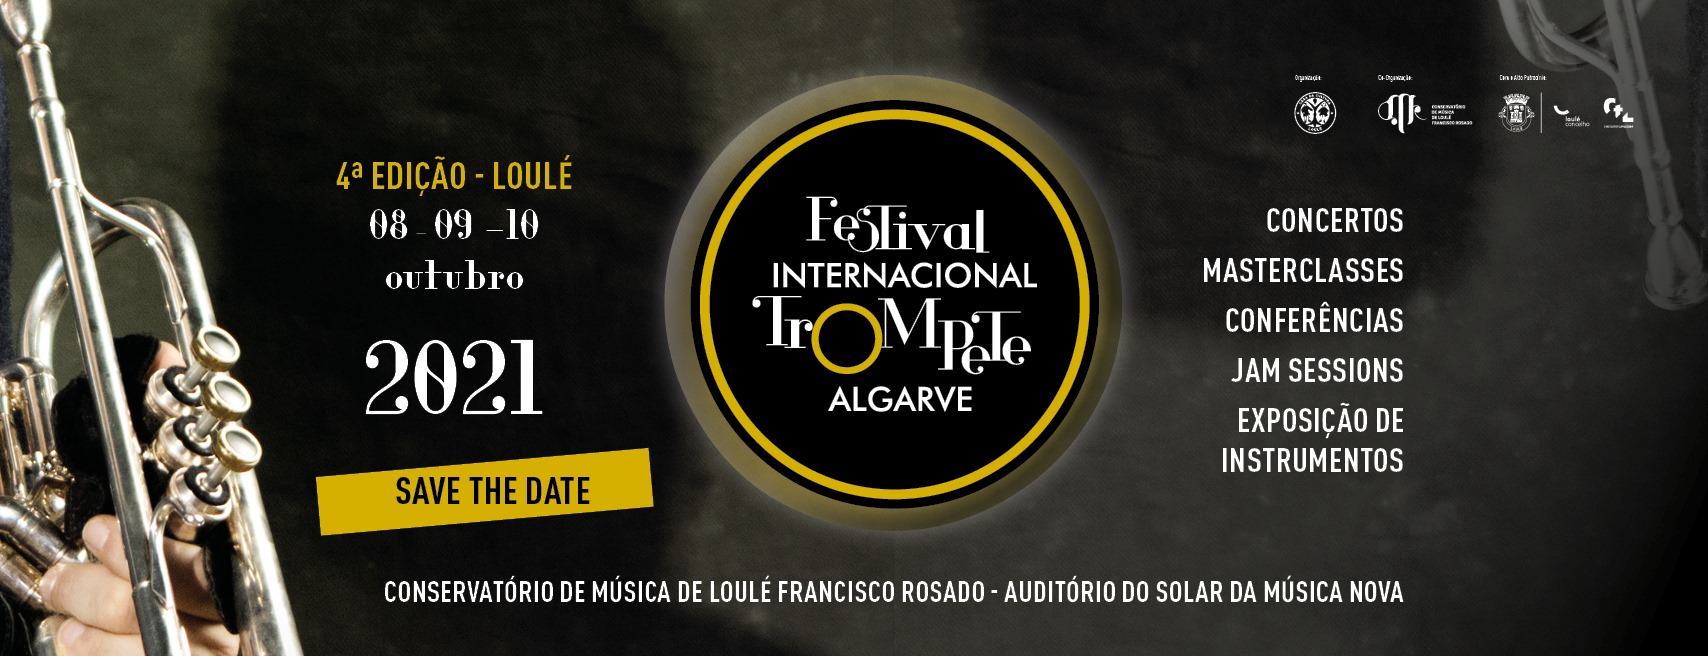 Festival Internacional de Trompete do Algarve